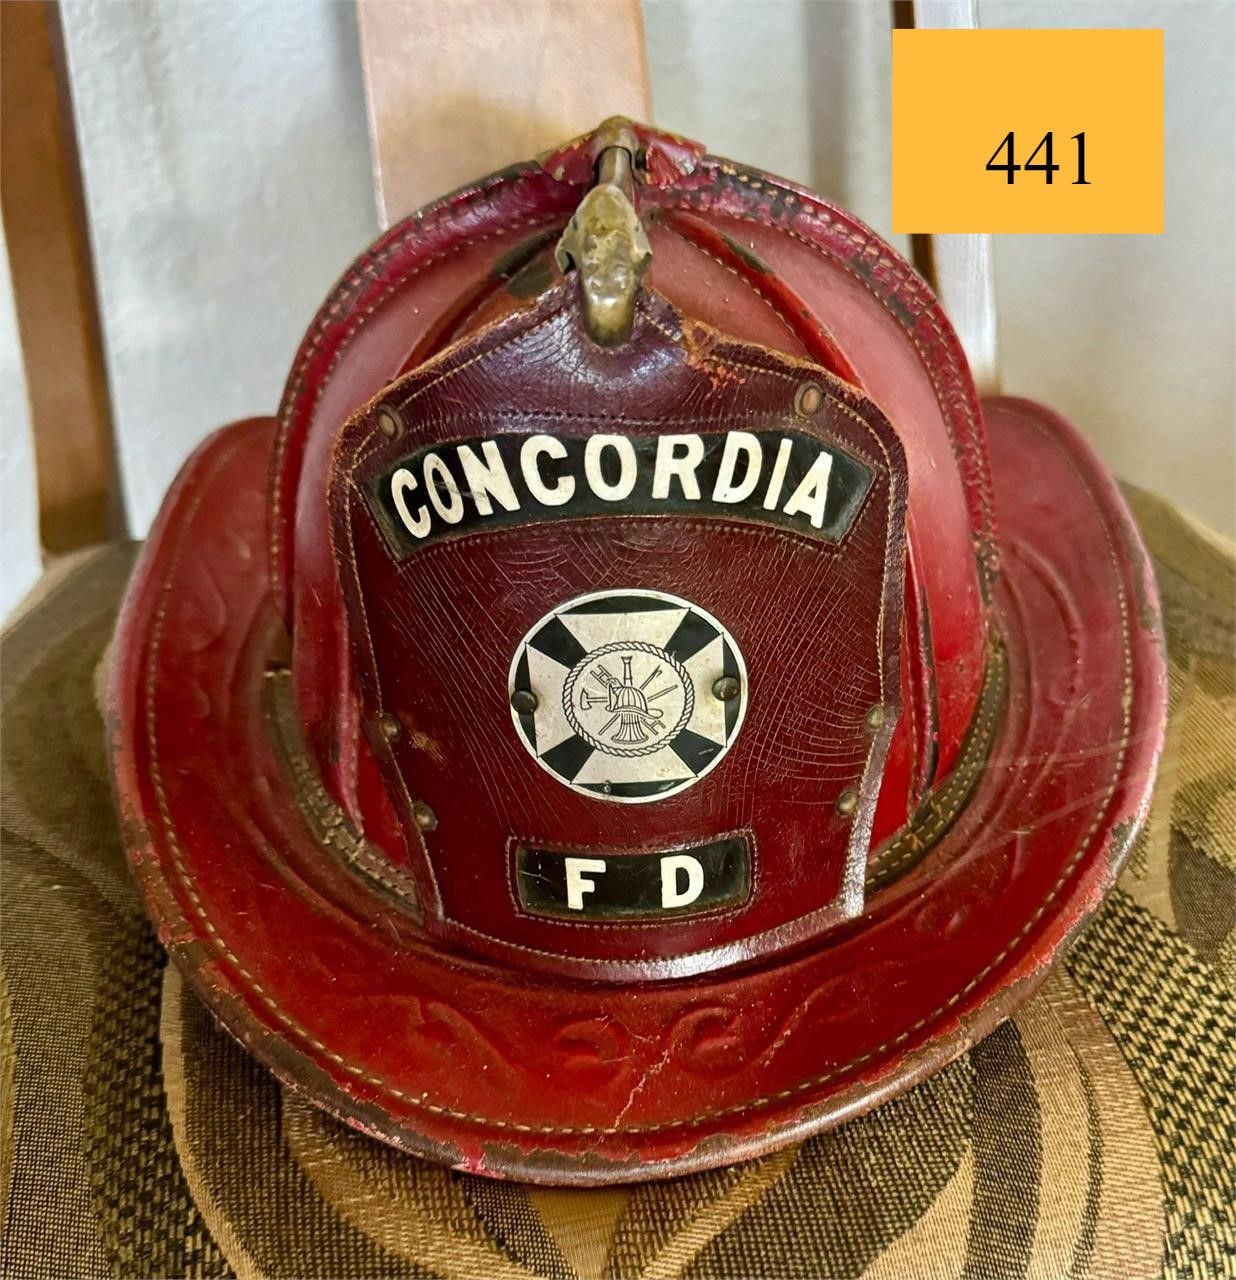 Vintage Concordia Fireman's Helmet